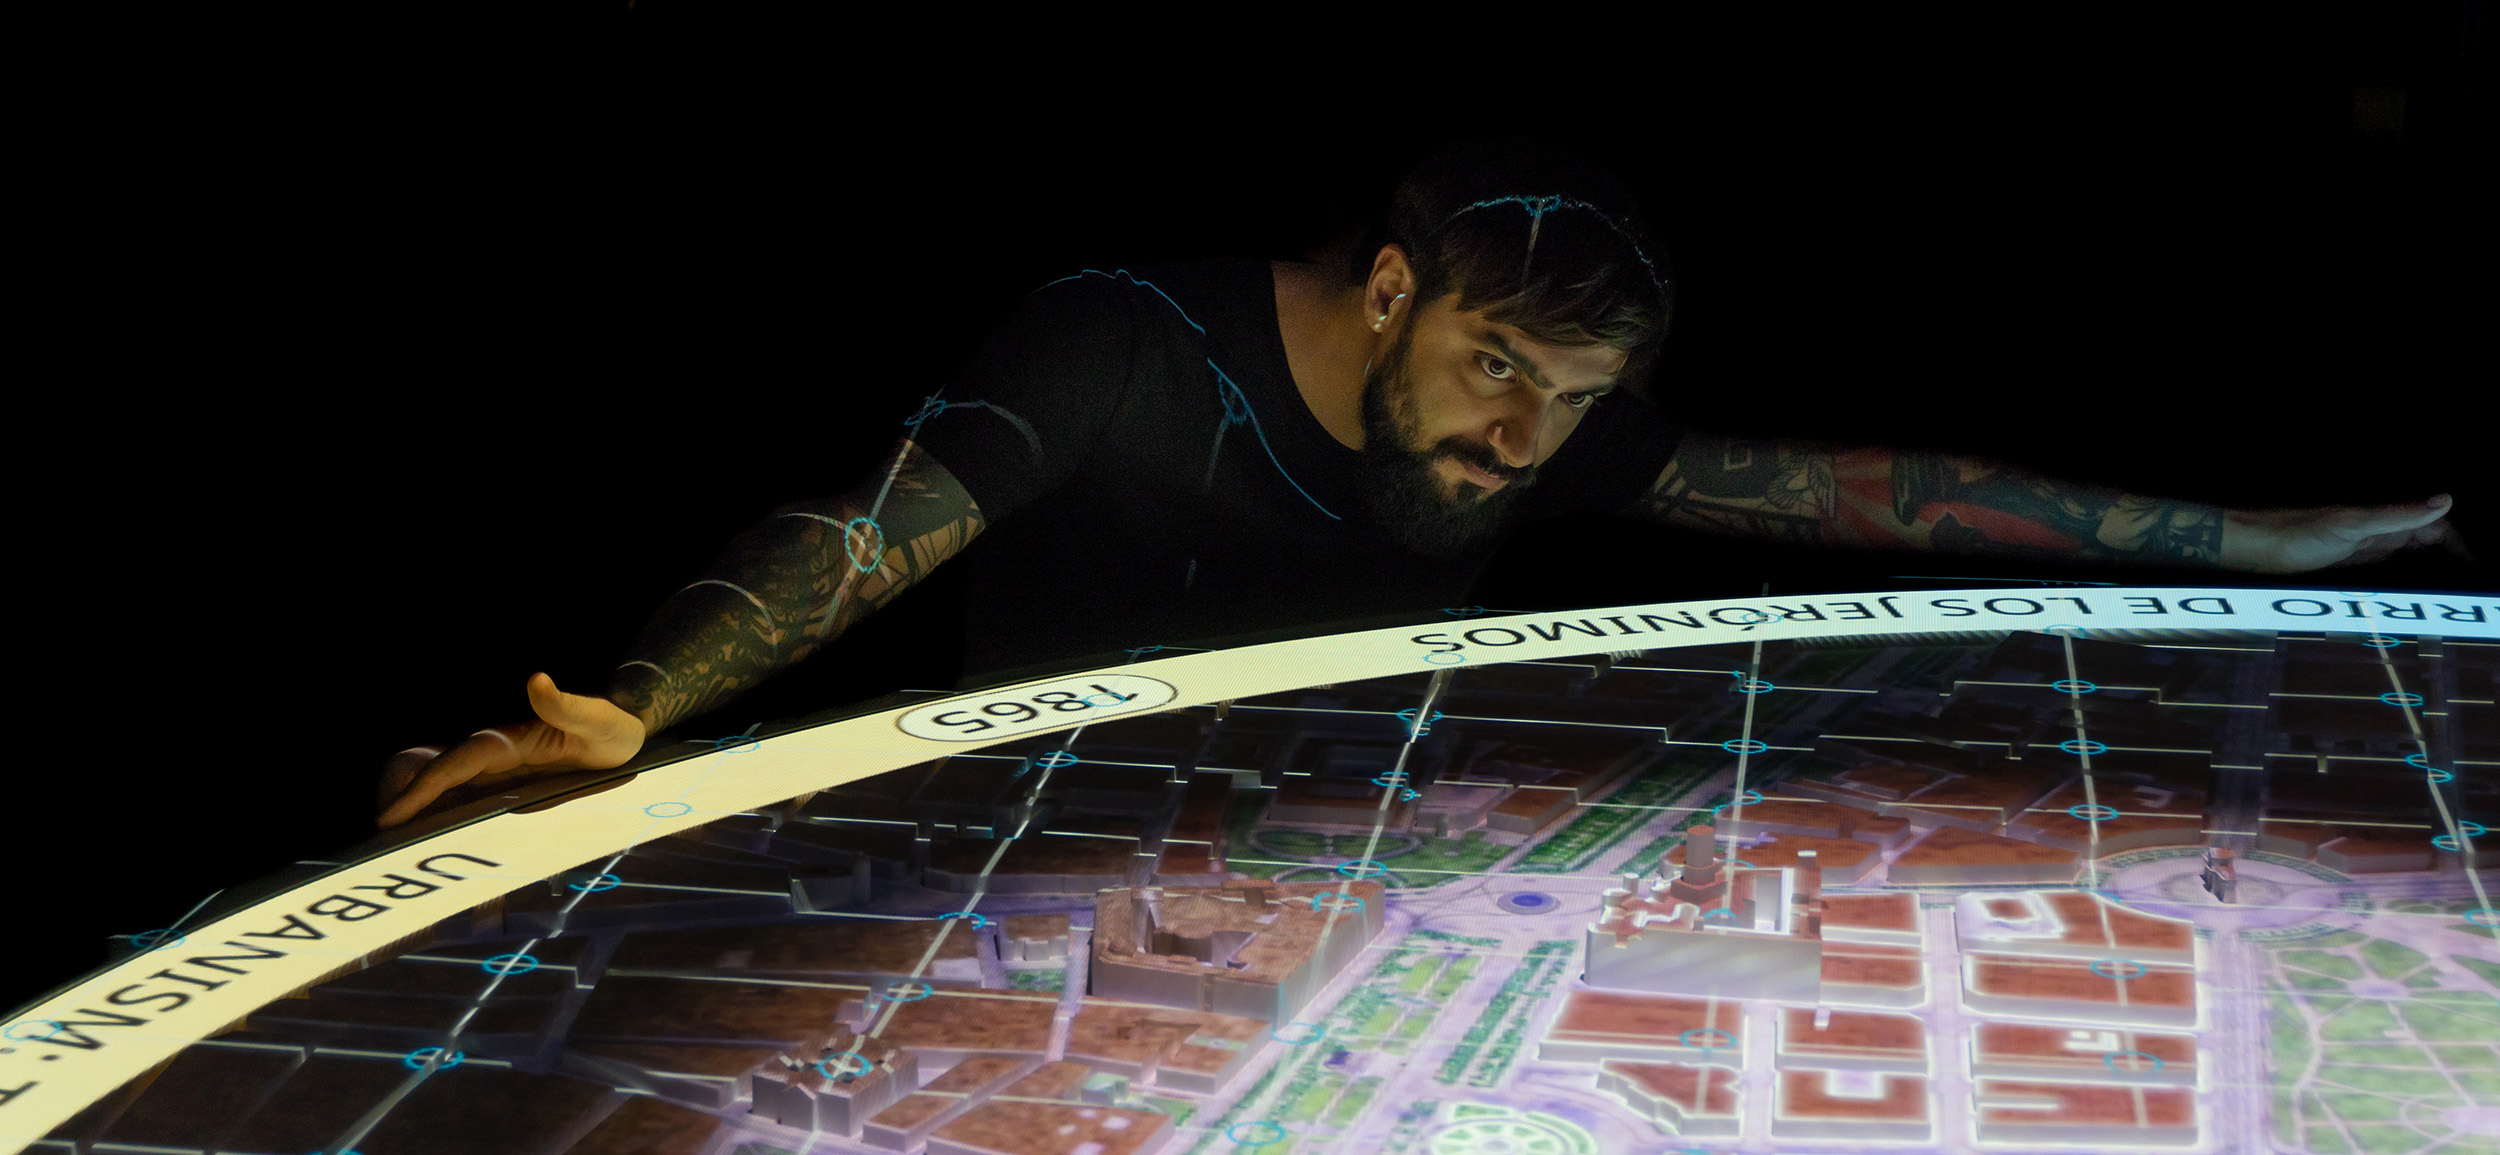 Lucas Forlenza - Paisaje de la luz - video mapping - UNESCO - Madrid